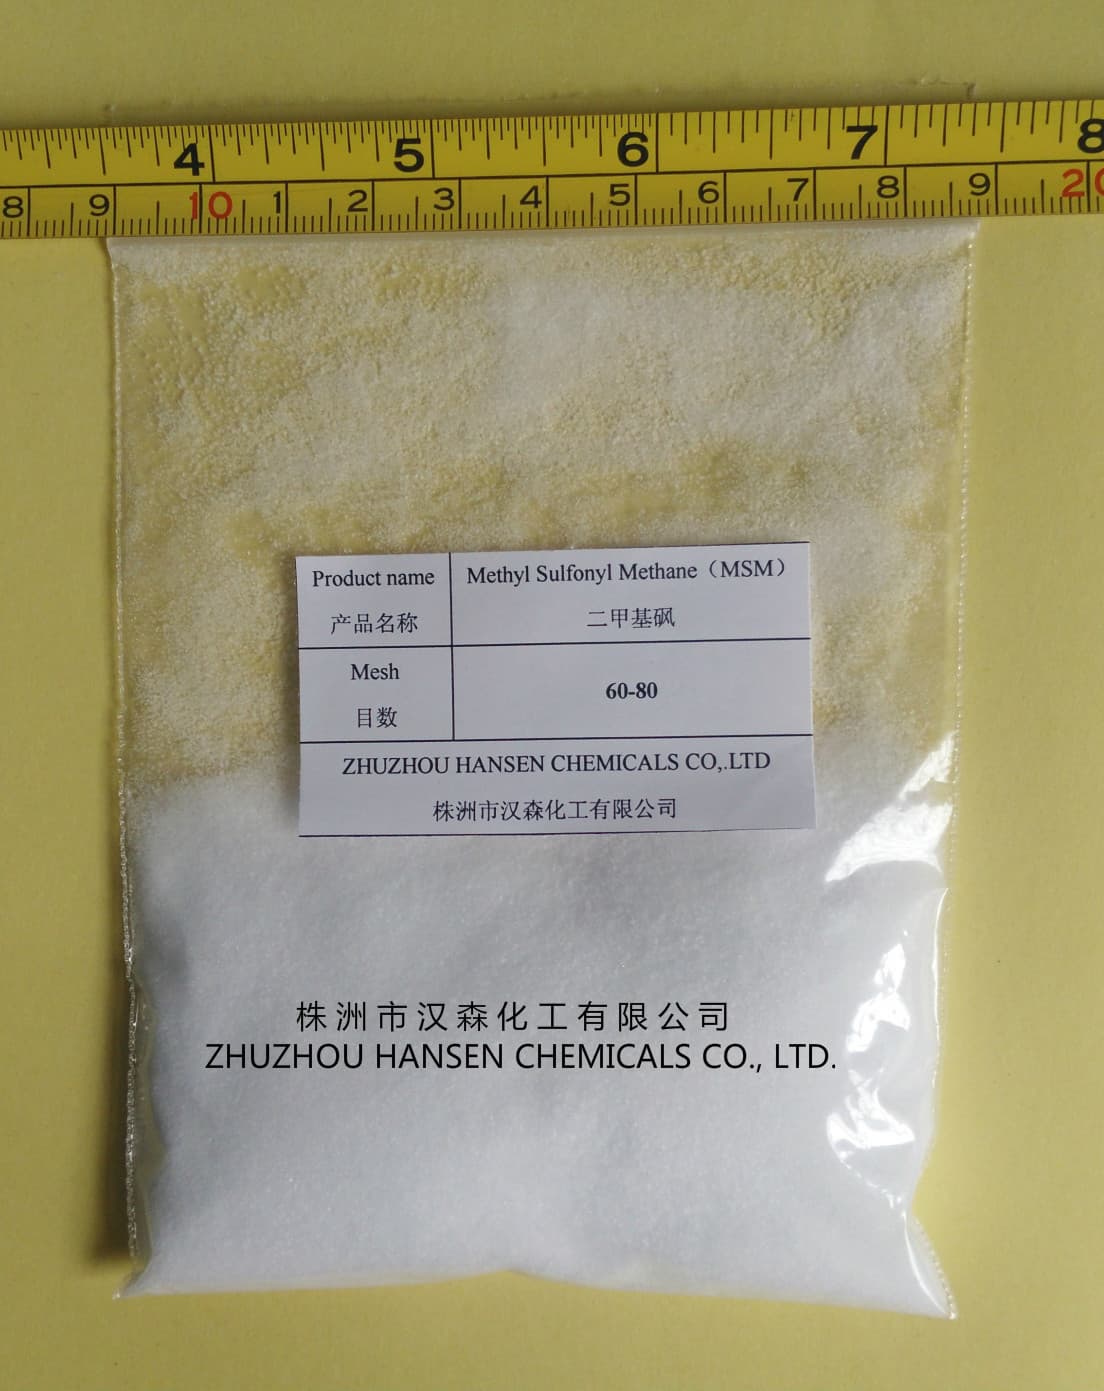 Methyl Sulfonyl Methane_MSM_ crystalline powder